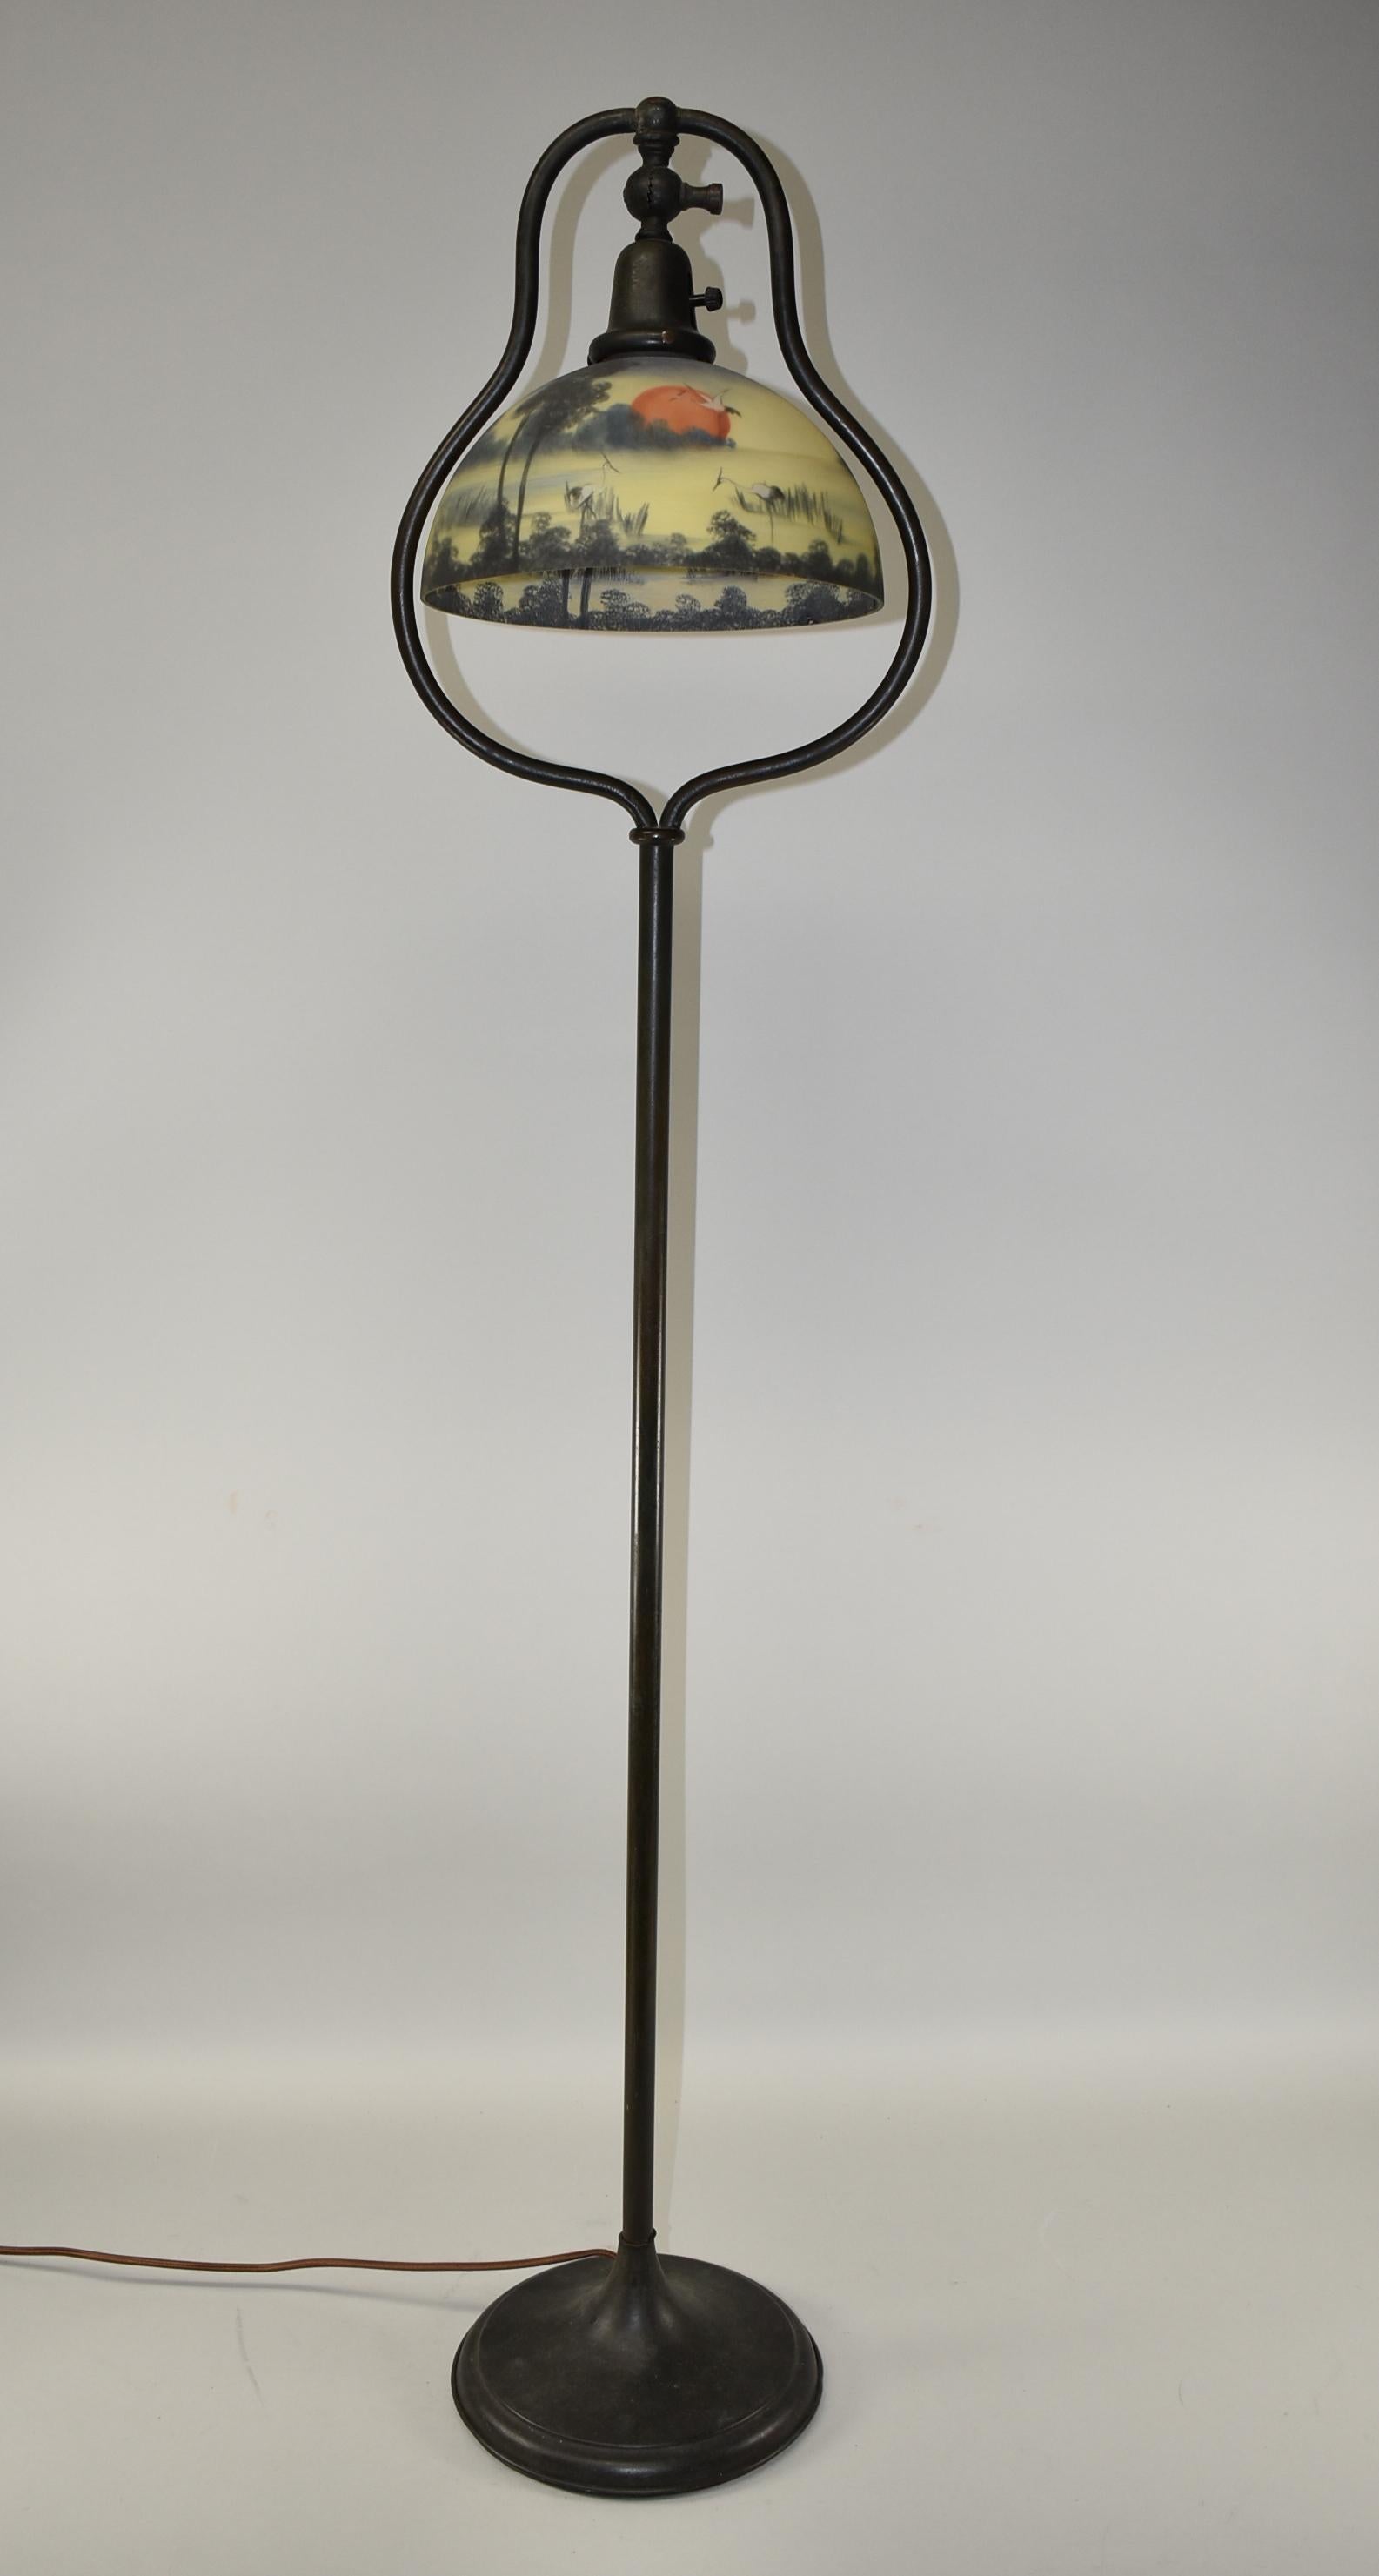 20th Century Vintage Classique Arts & Crafts Harp Floor Lamp Painted Shade Water, Cranes